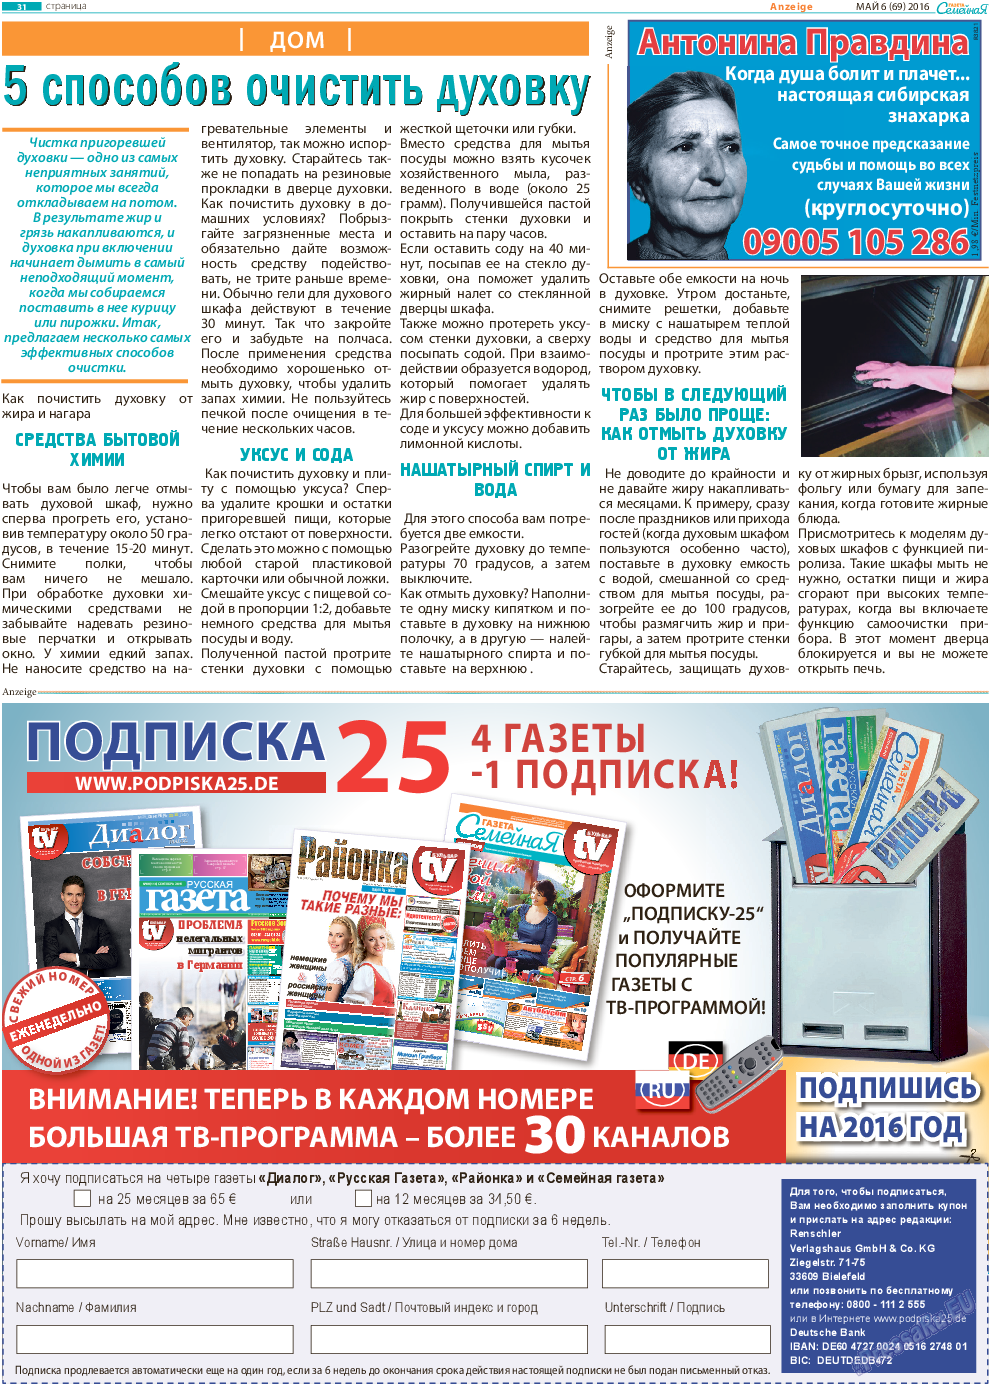 Семейная газета, газета. 2016 №6 стр.31